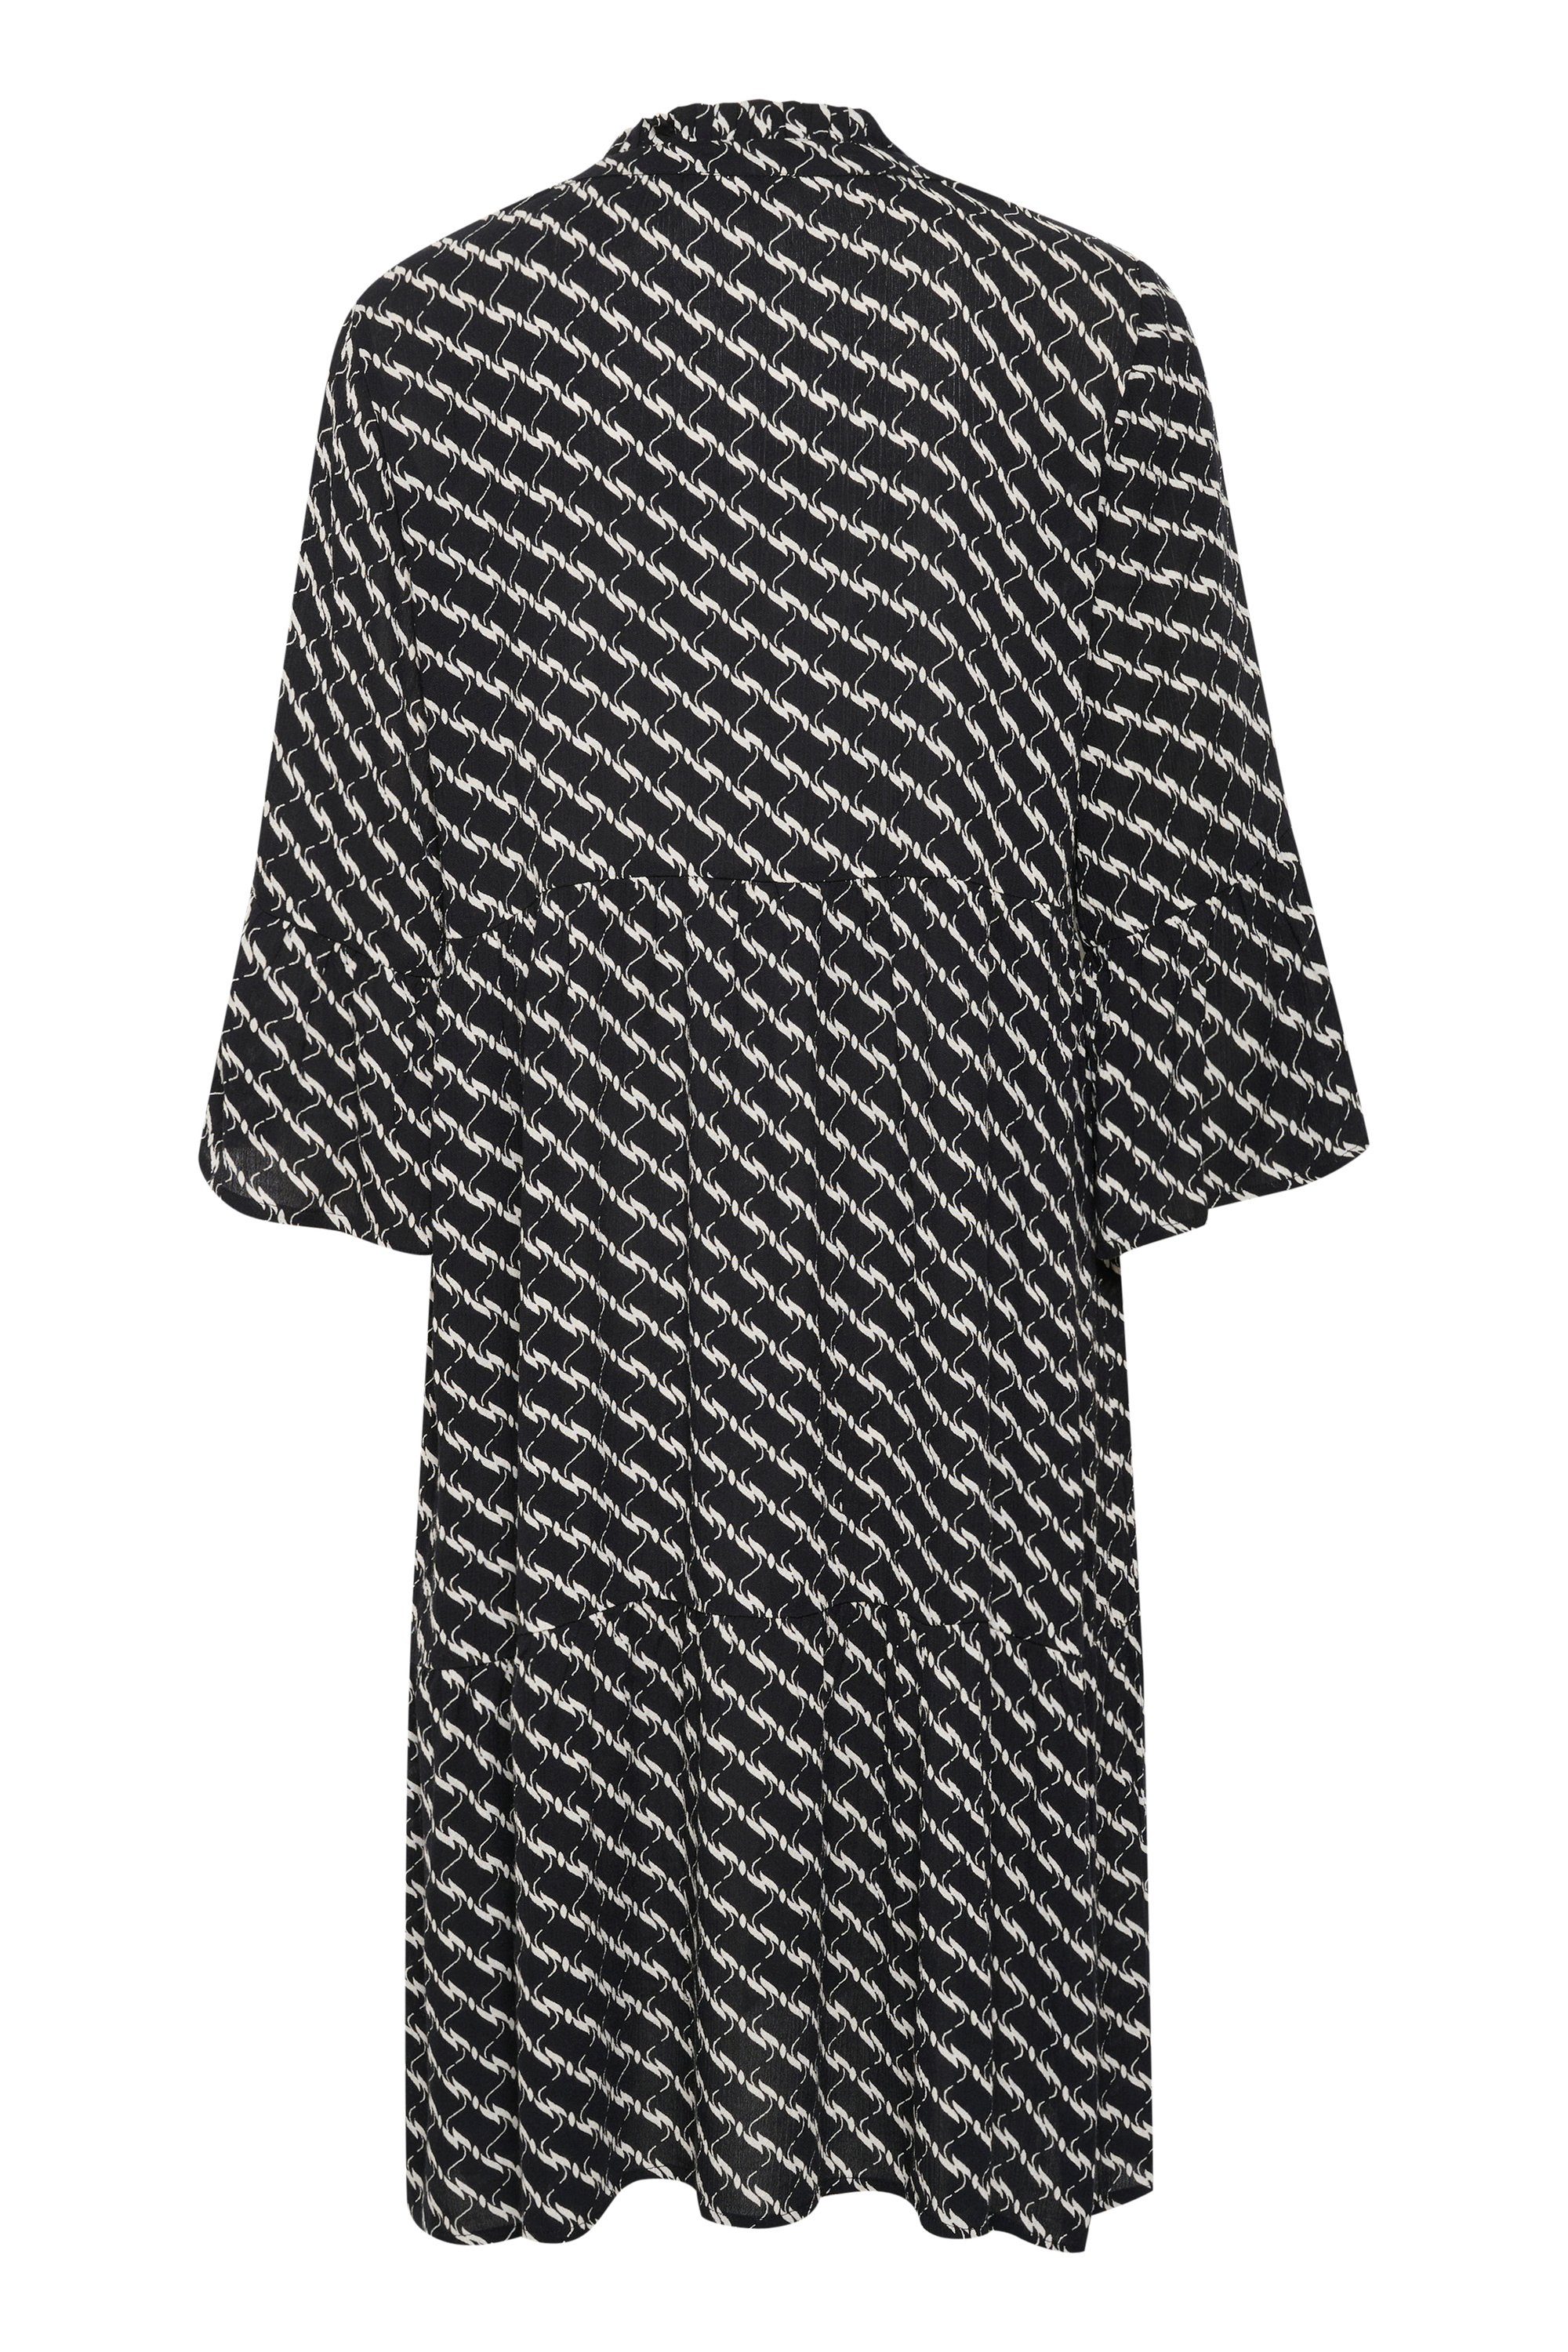 Graphic Jerseykleid Kleid KAFFE Black/Chalk Print KAmarita